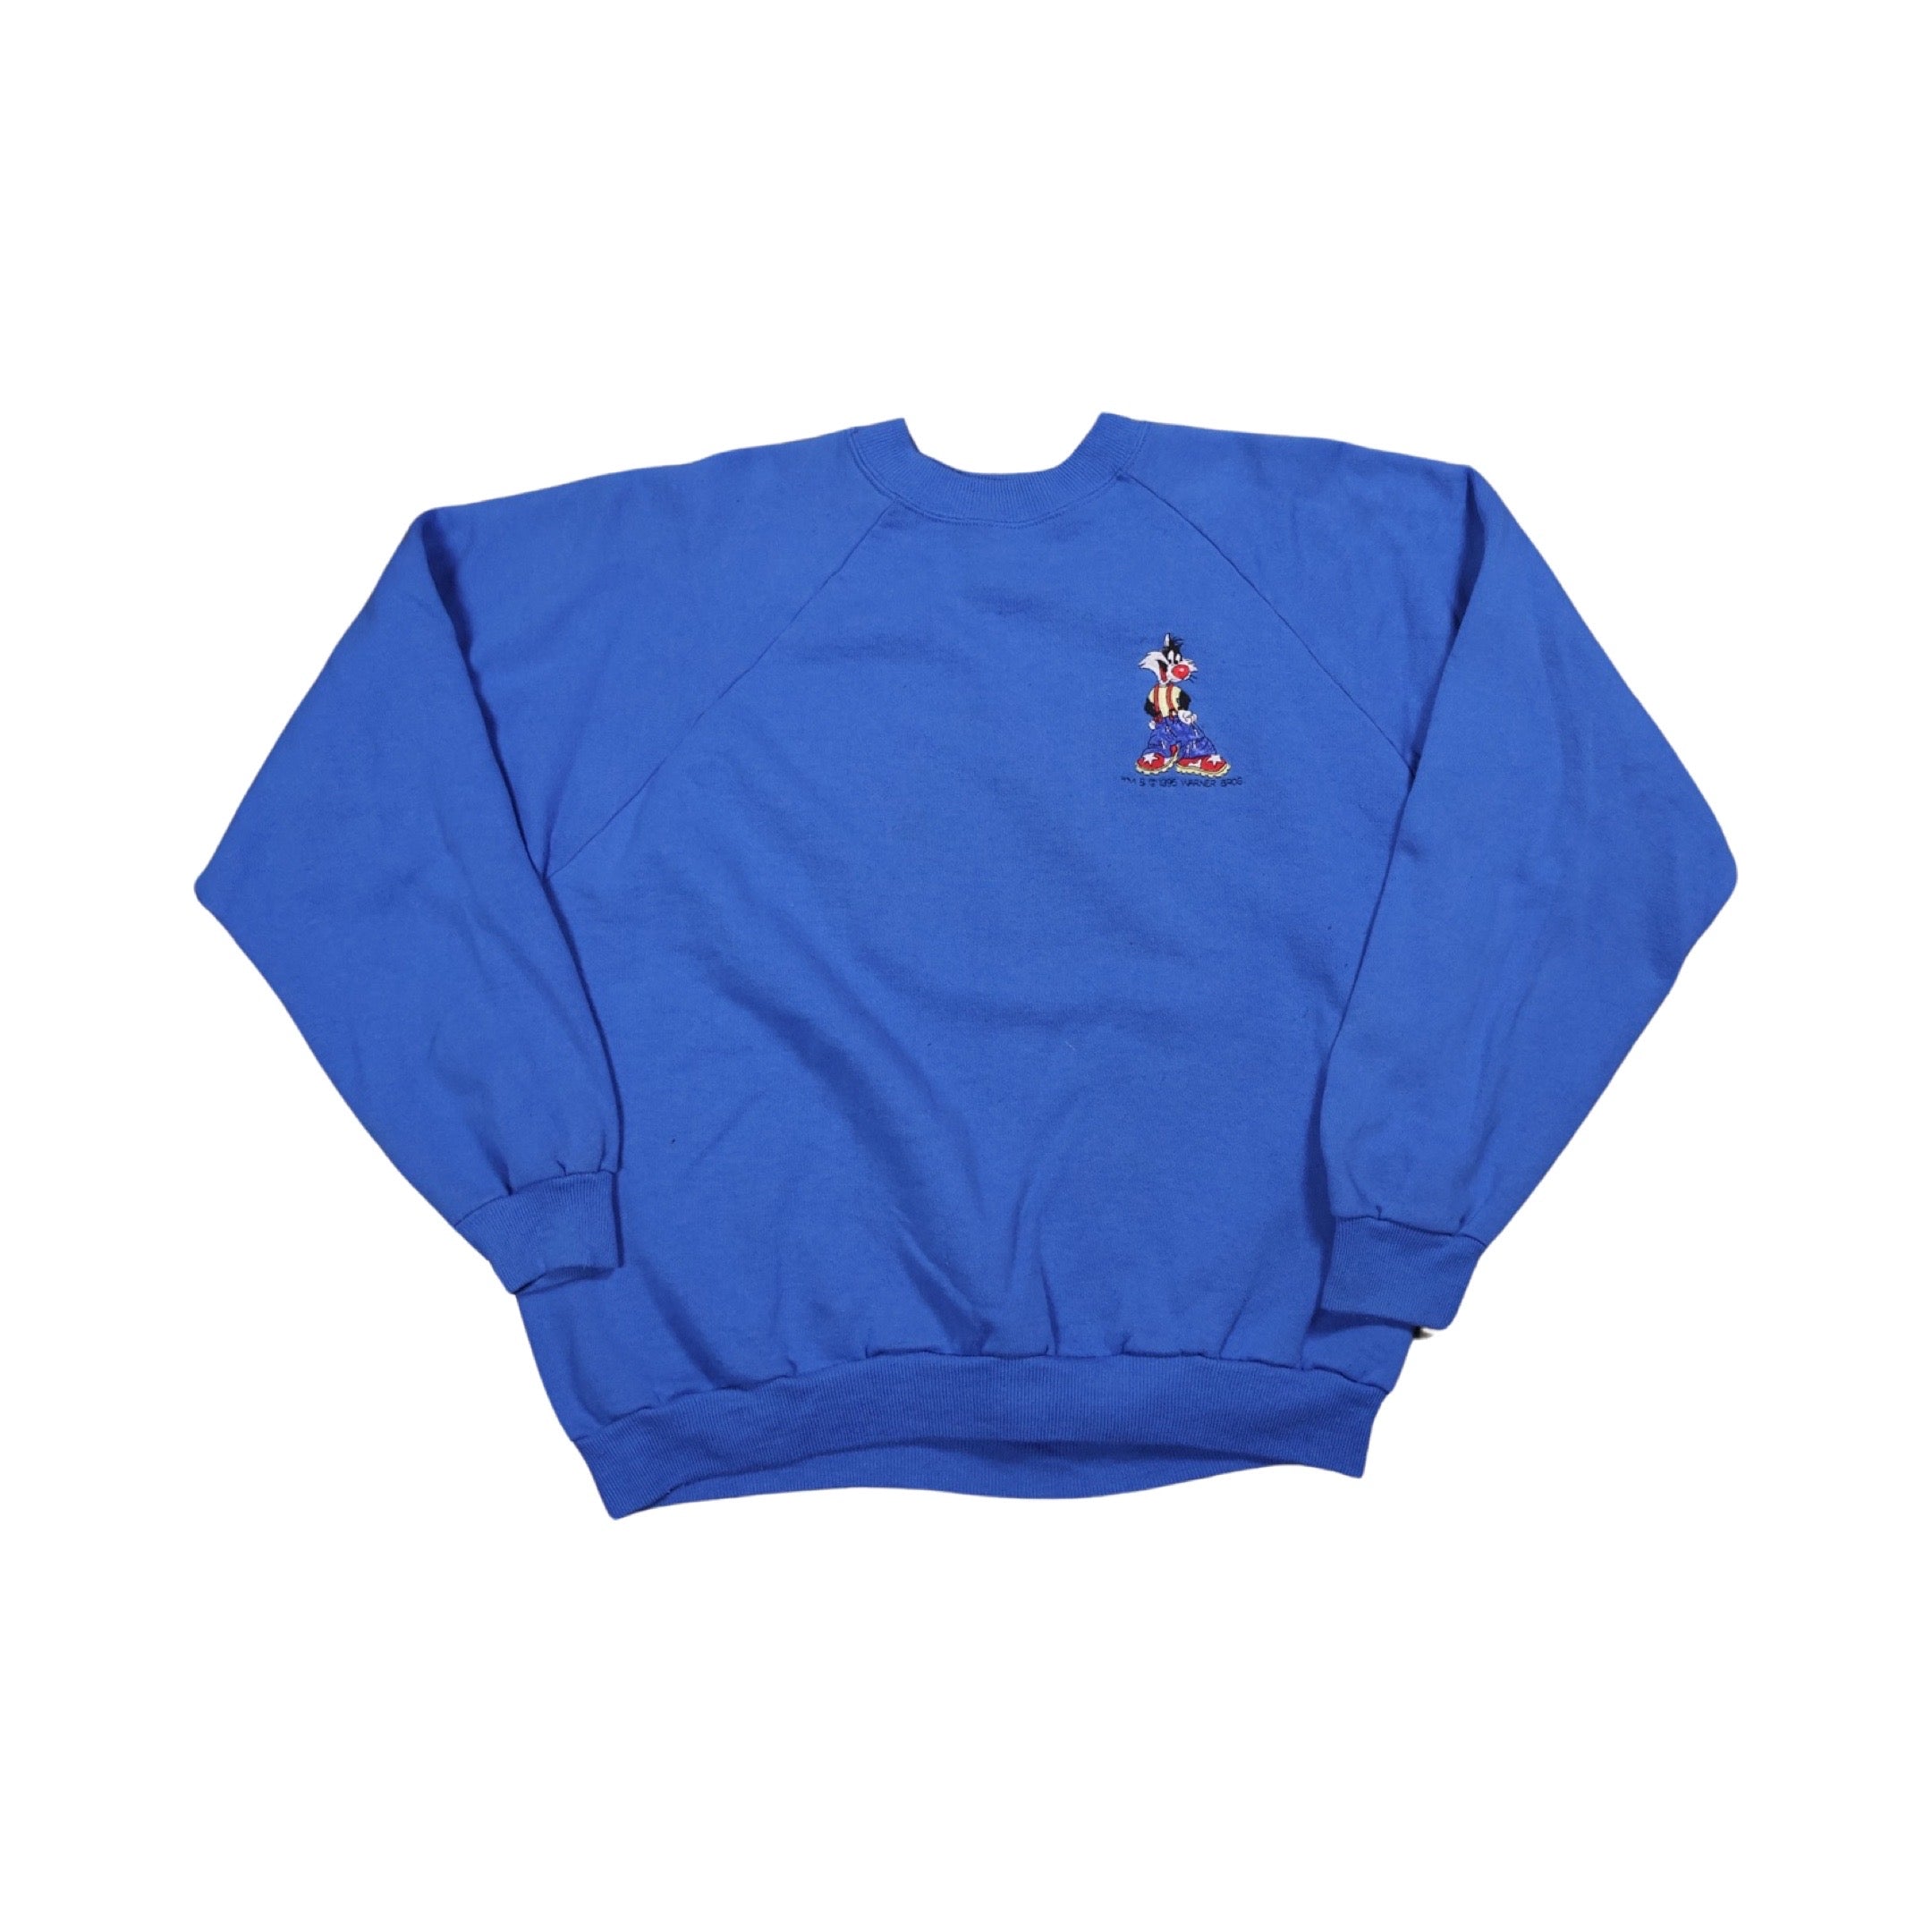 Sylvester 1995 Sweater (XL)